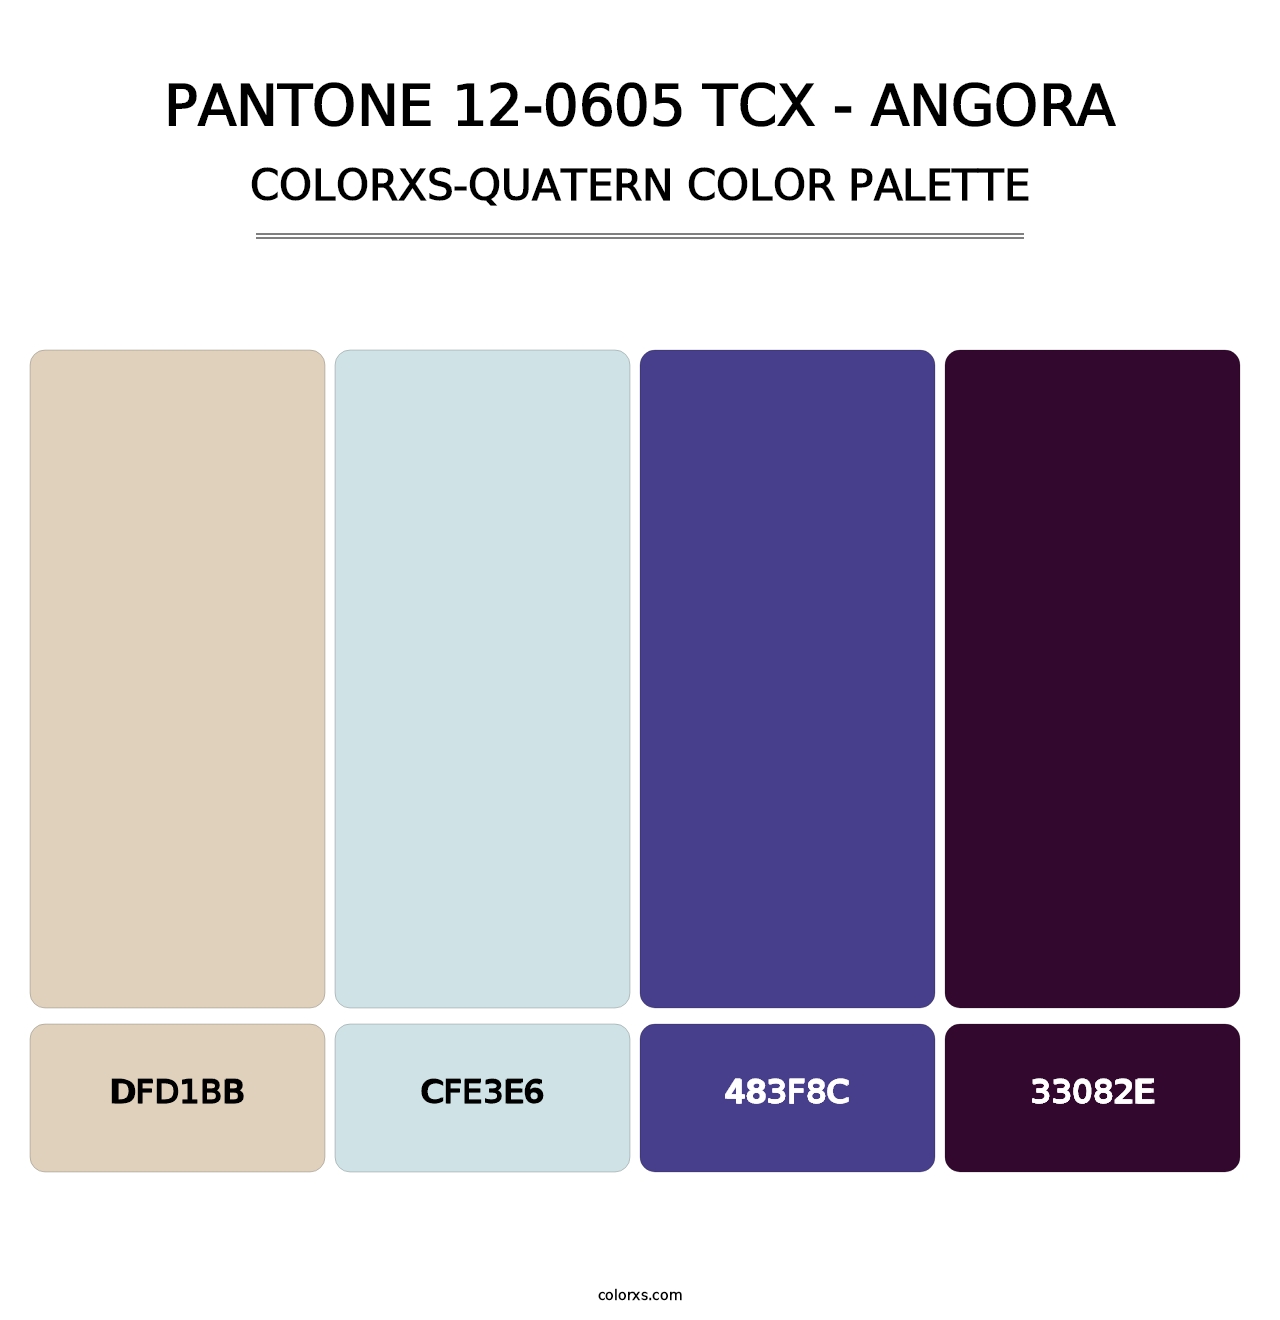 PANTONE 12-0605 TCX - Angora - Colorxs Quatern Palette